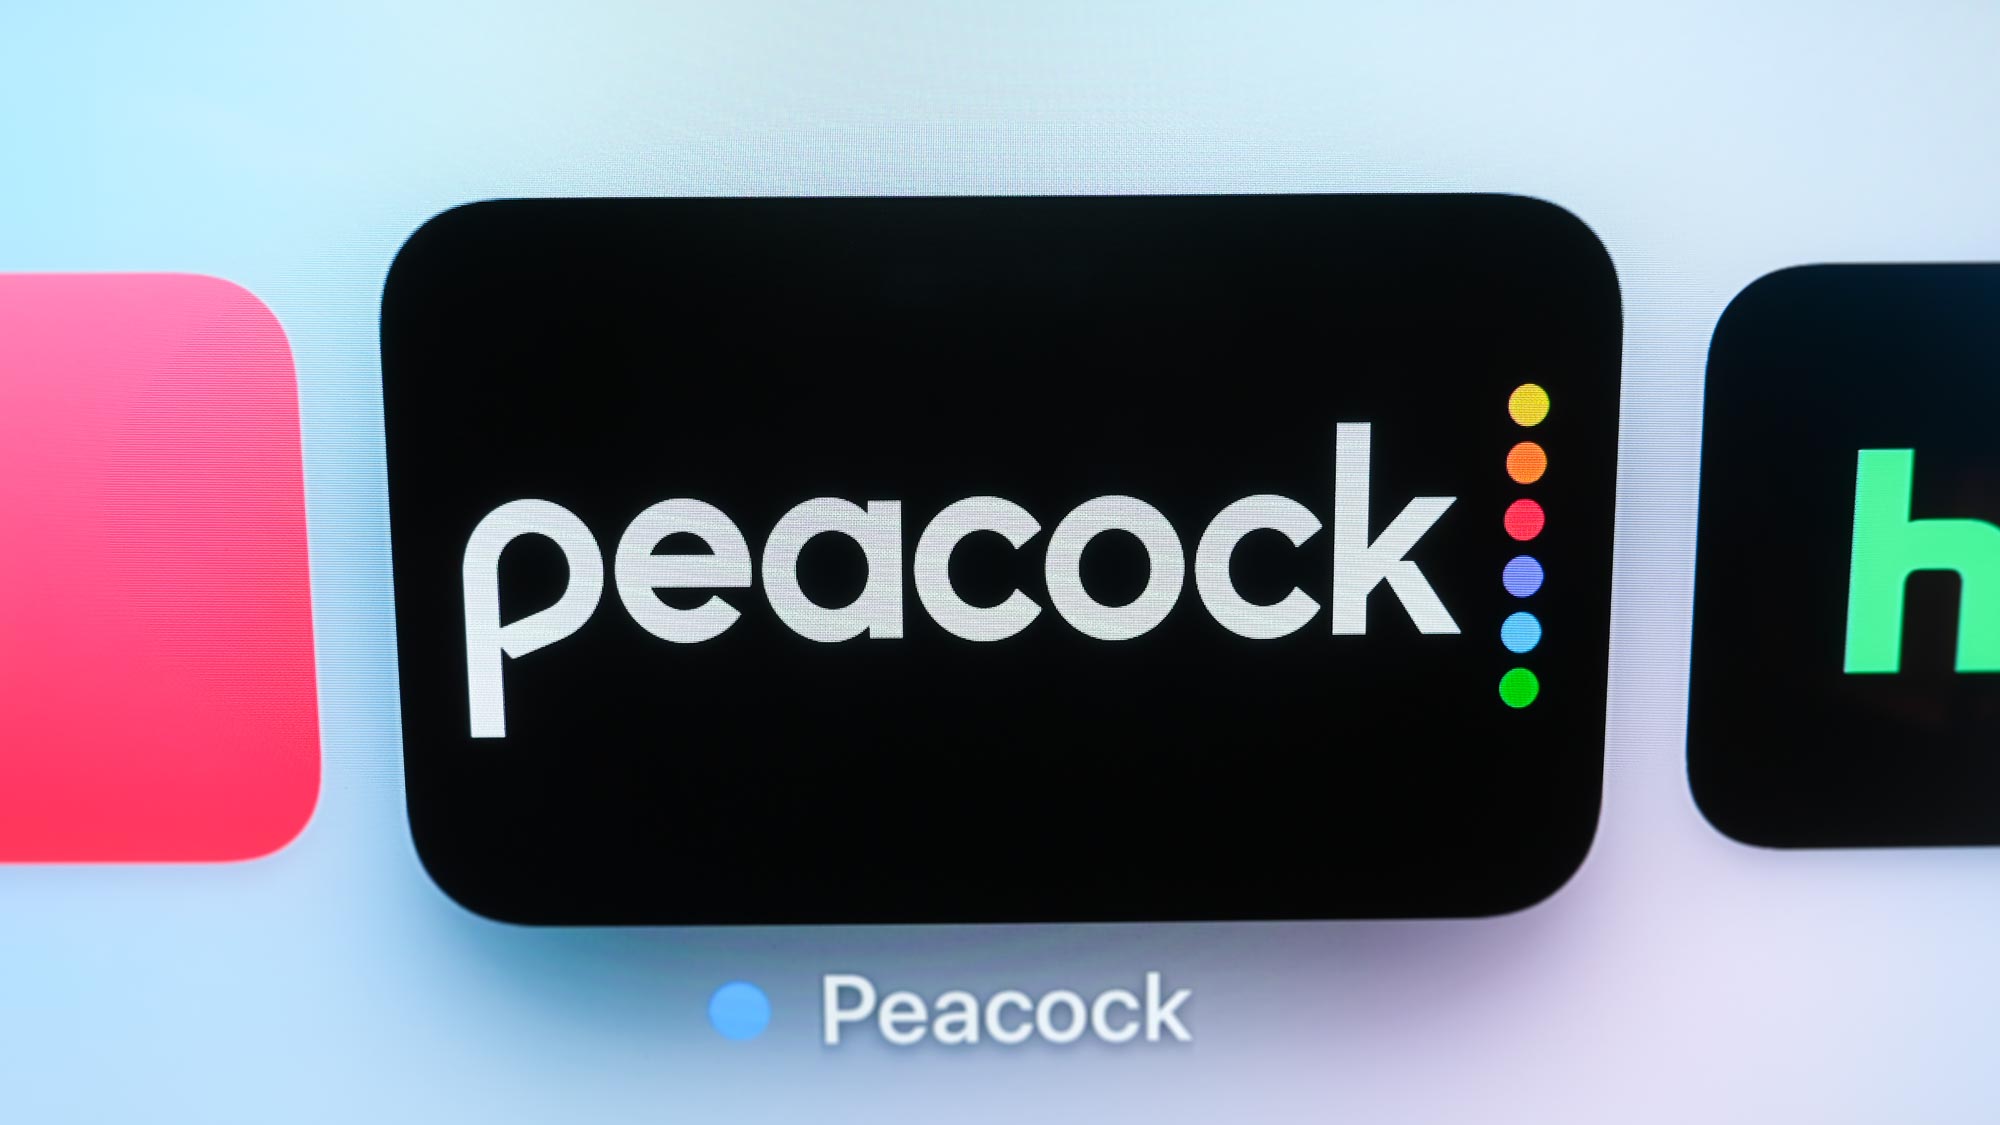 peacock super bowl 2022 free